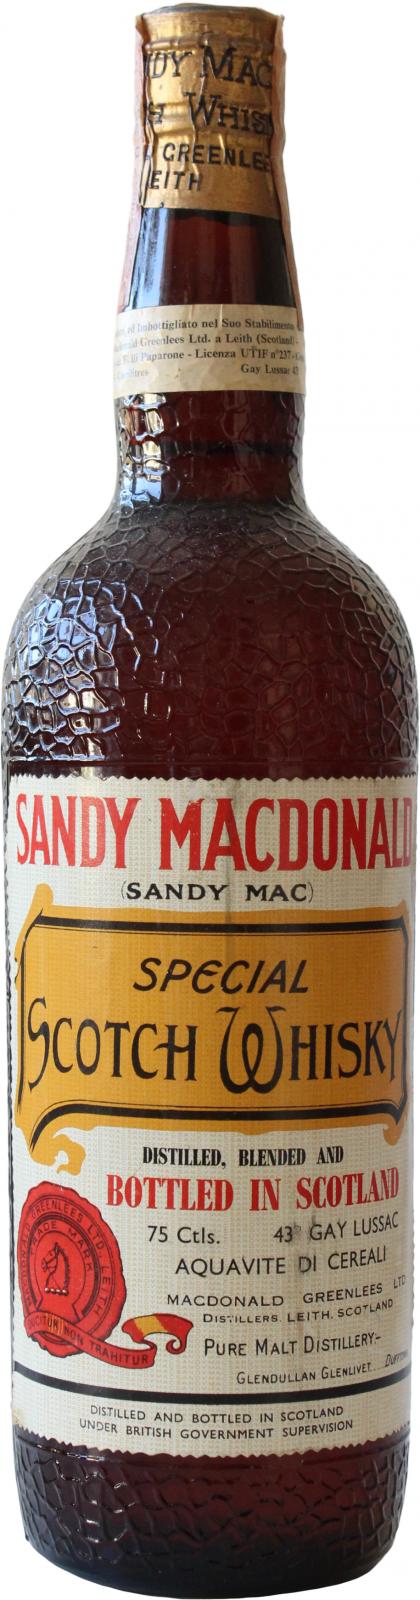 Sandy Macdonald Special Scotch Whisky